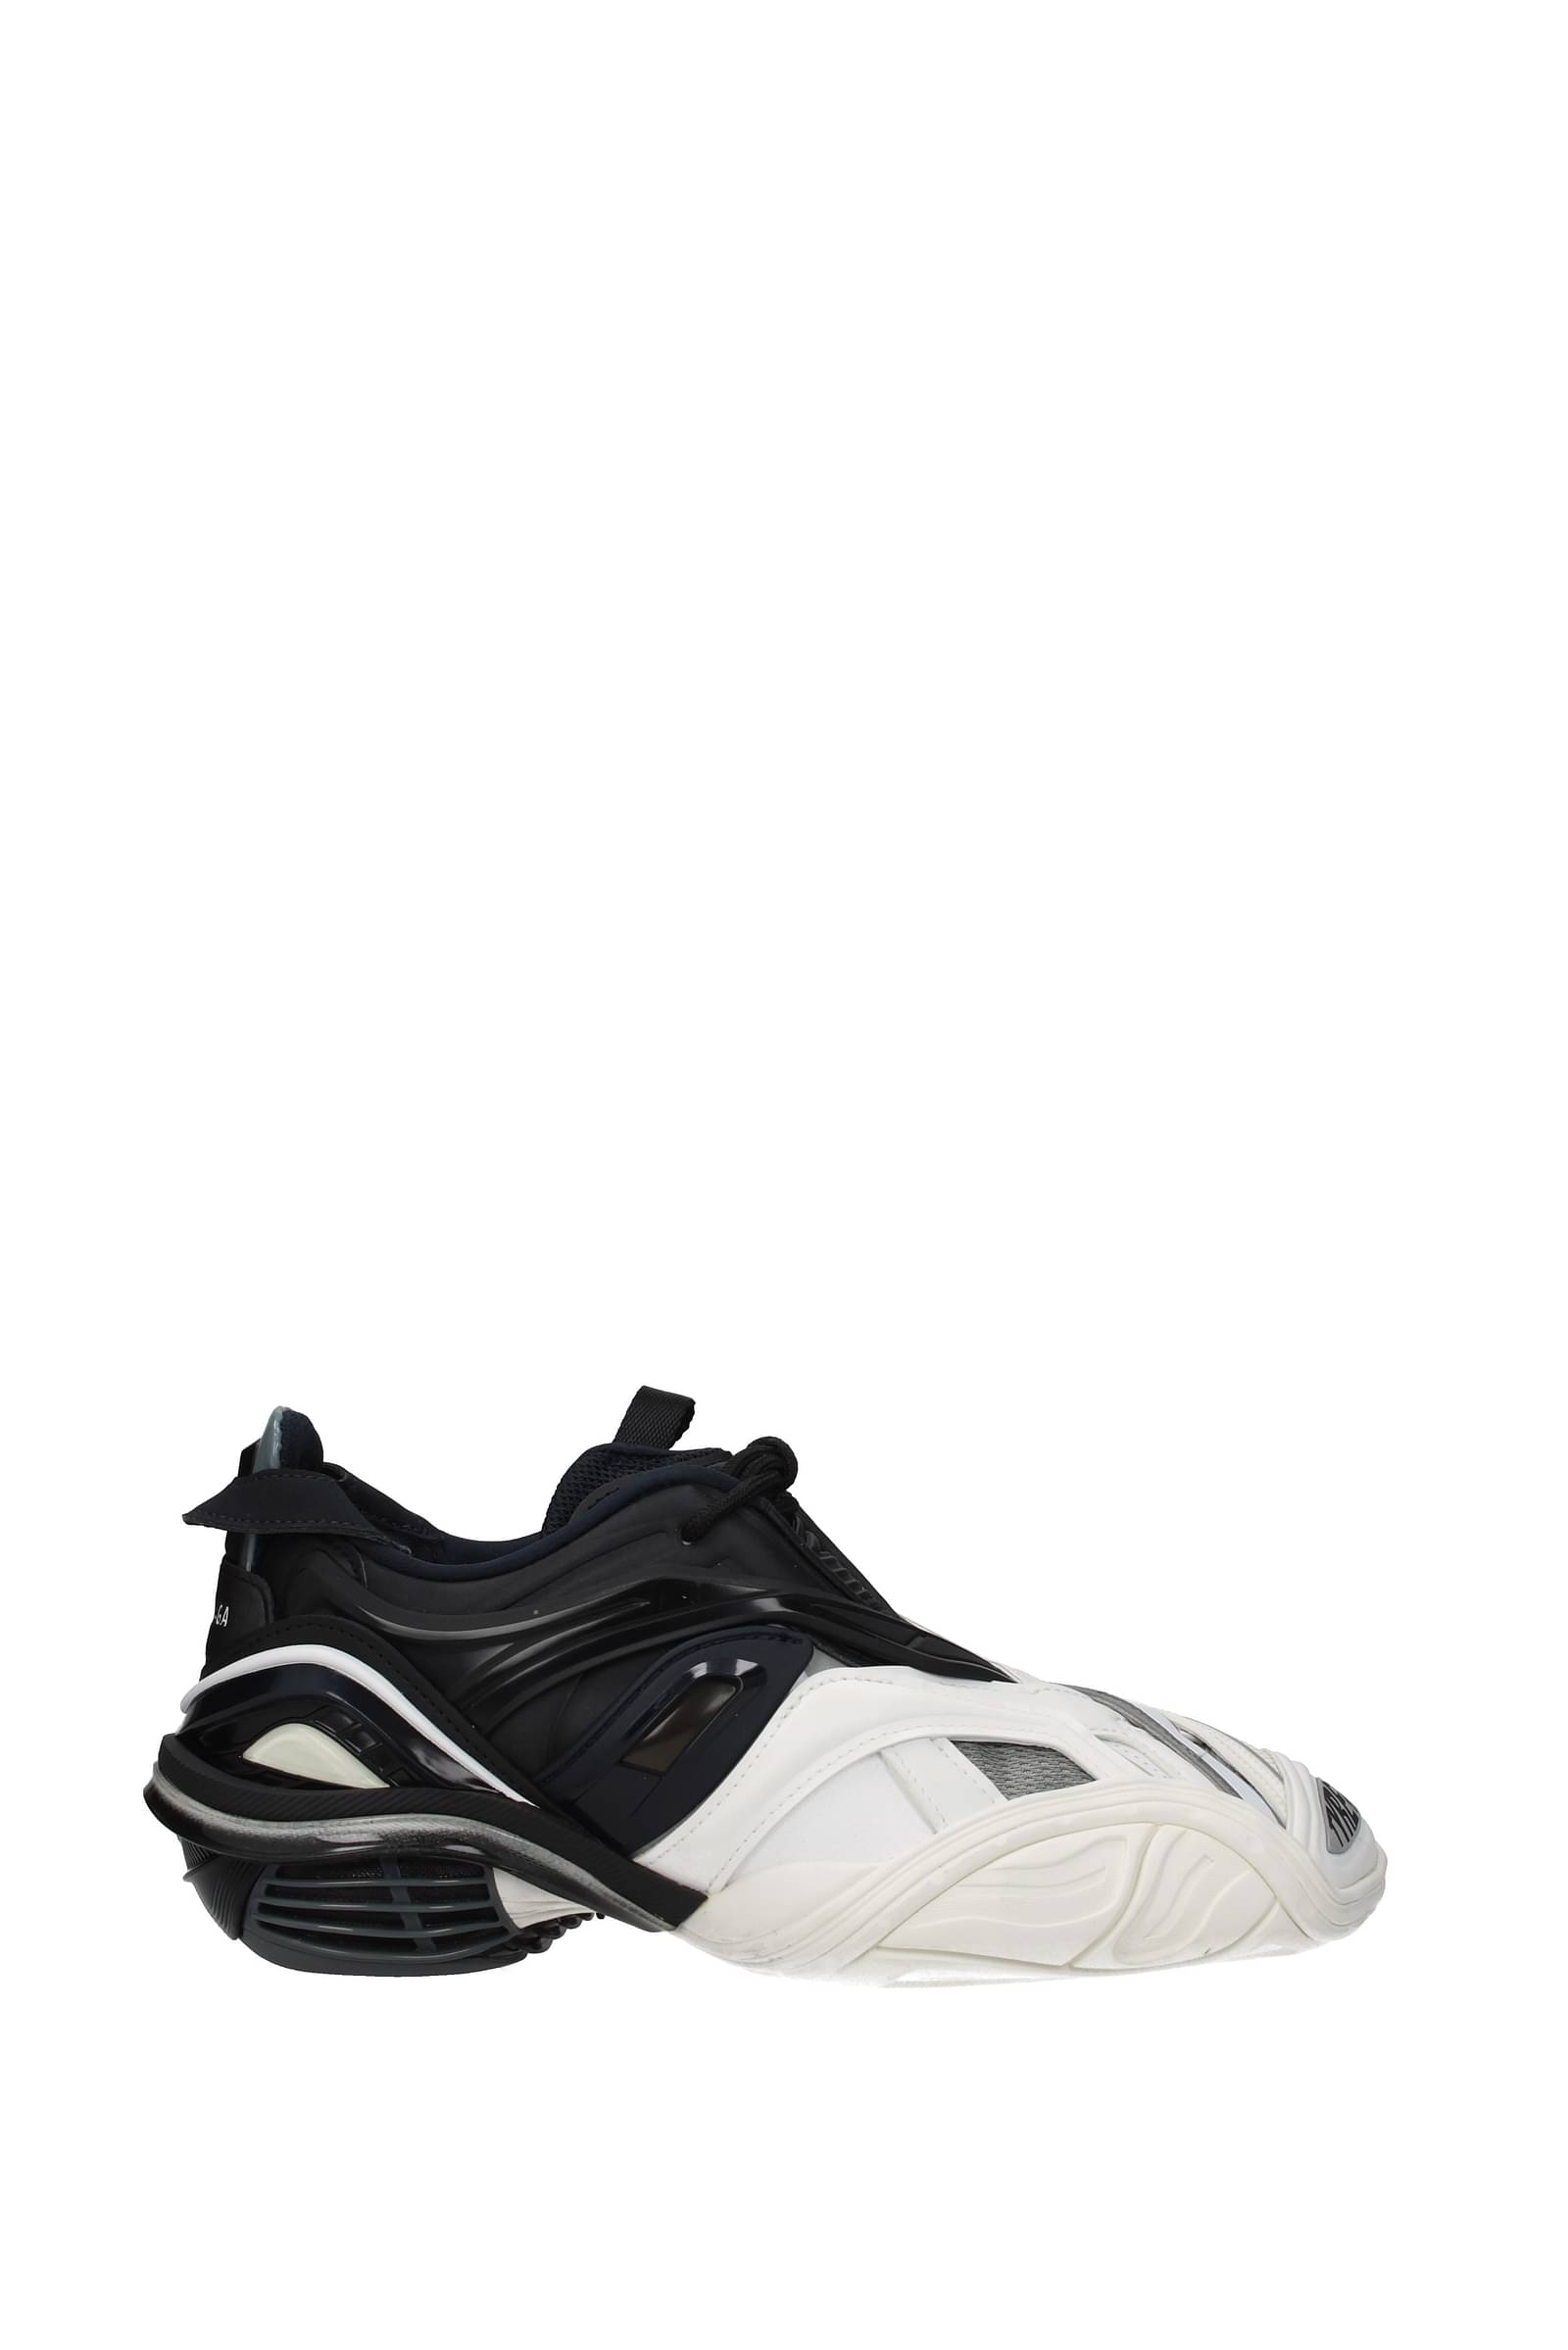 Balenciaga Sneakers tyrex Women 617517W2CB11090 Fabric White Black